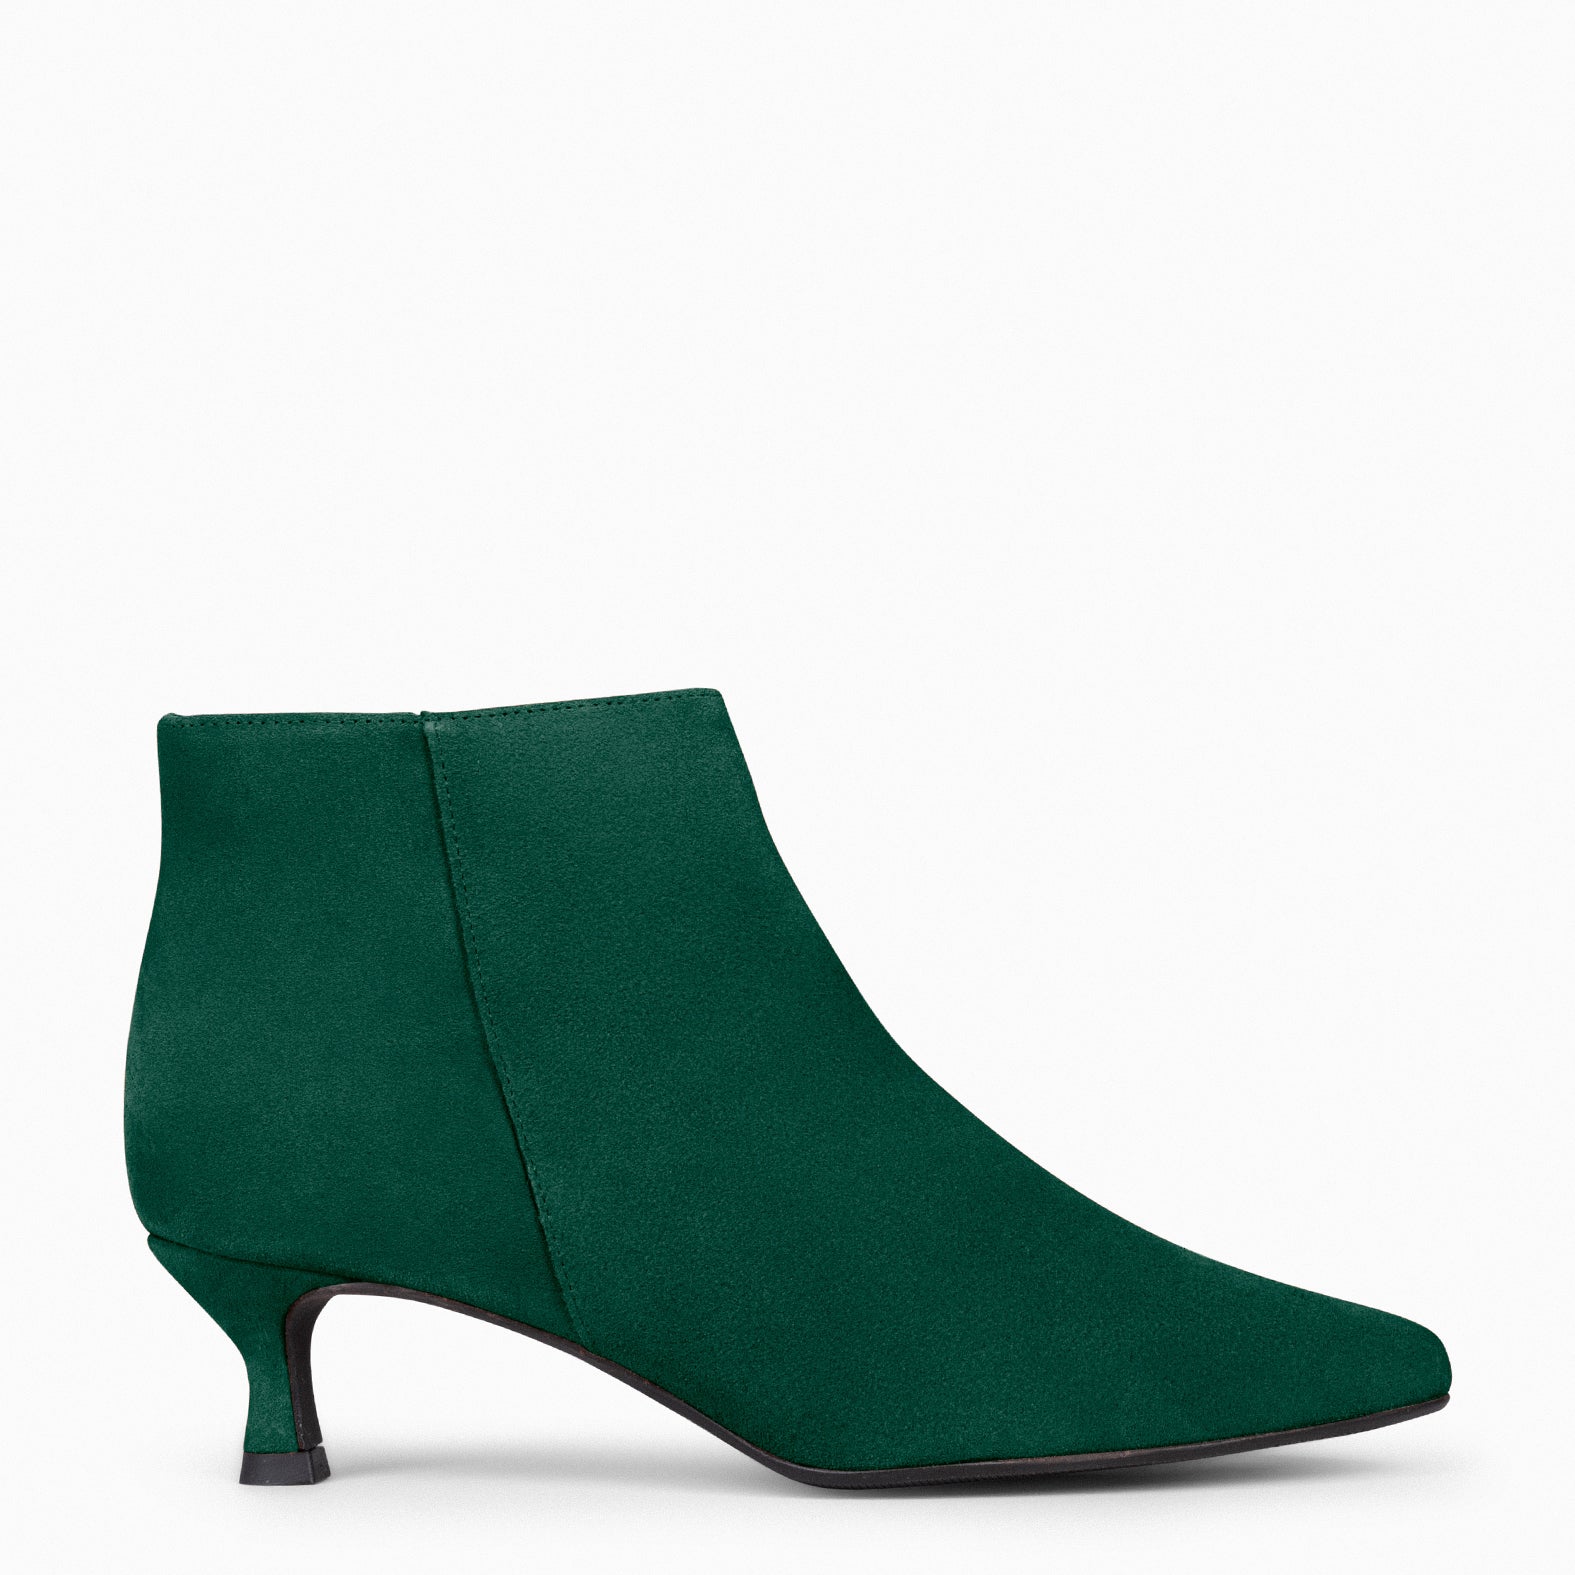 ROYAL SUEDE – GREEN Low heel booties